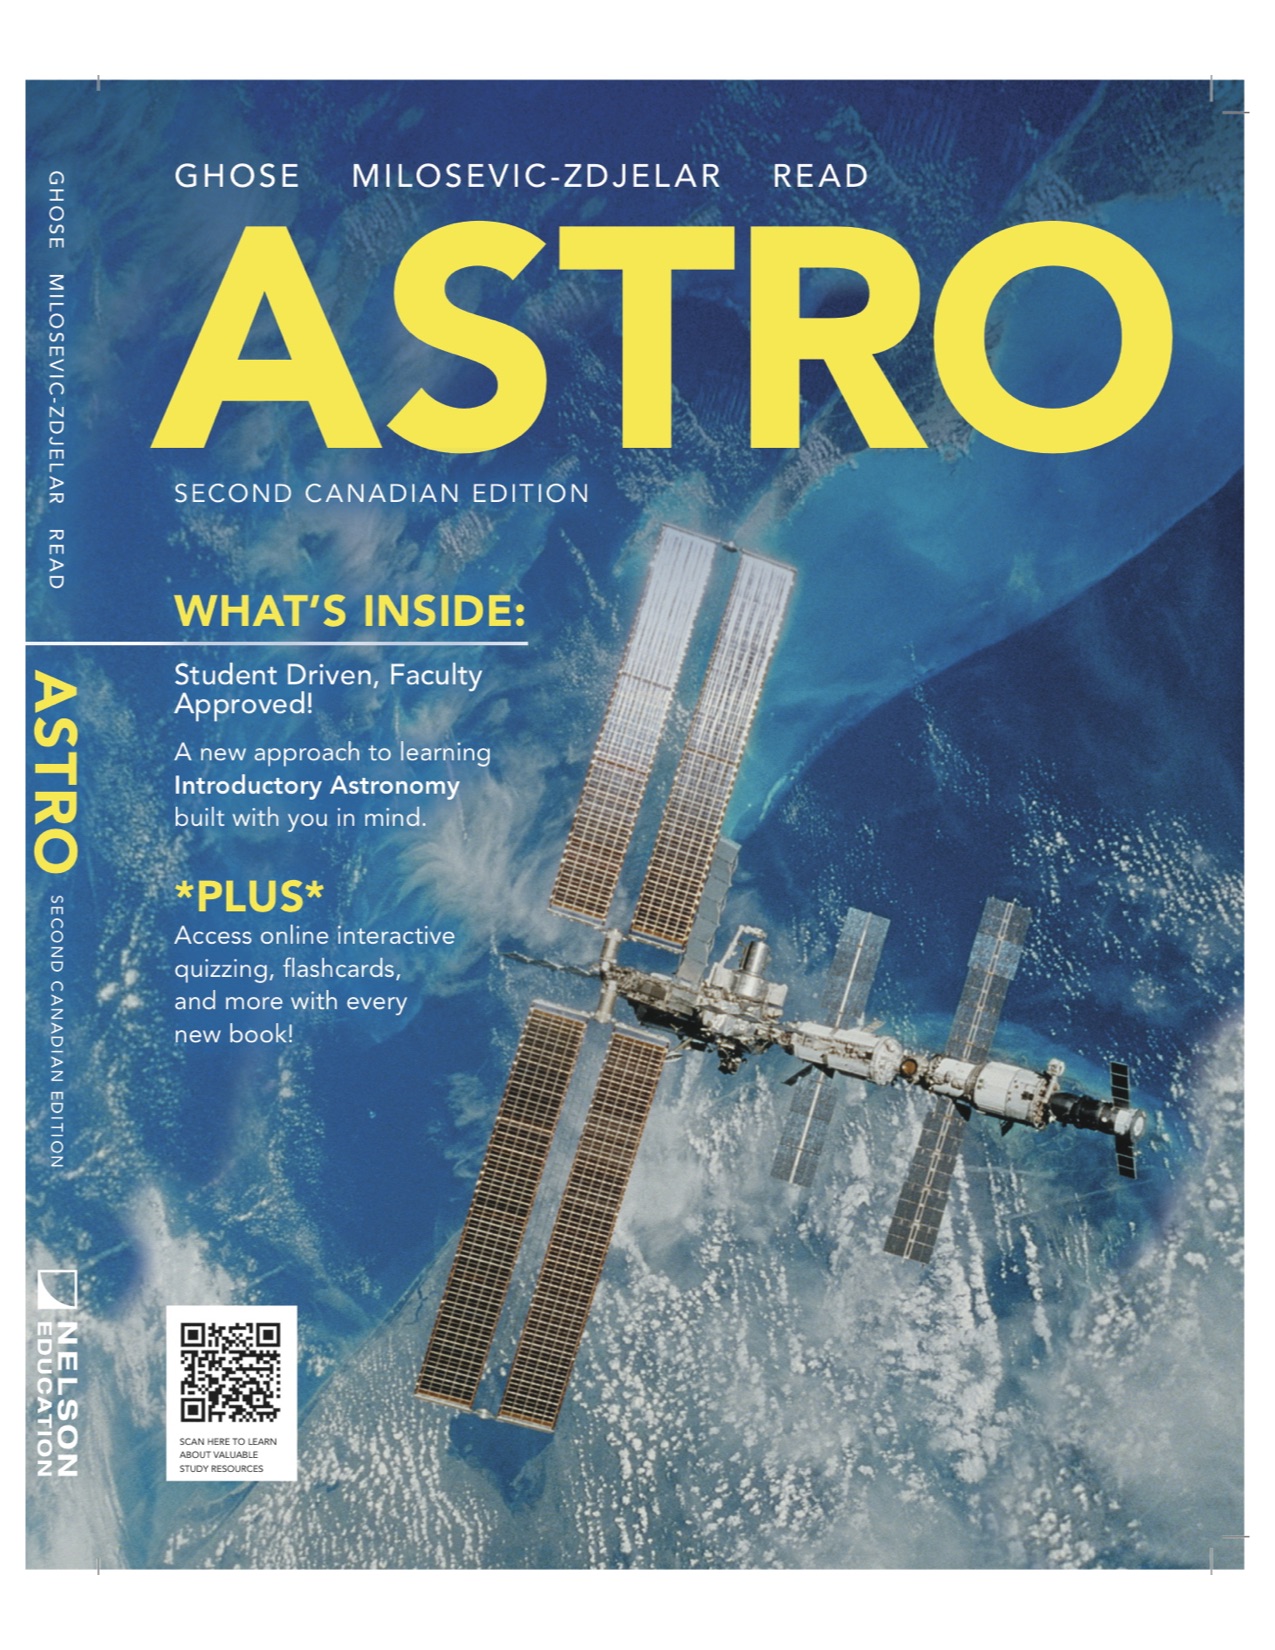 ASTRO Textbook cover